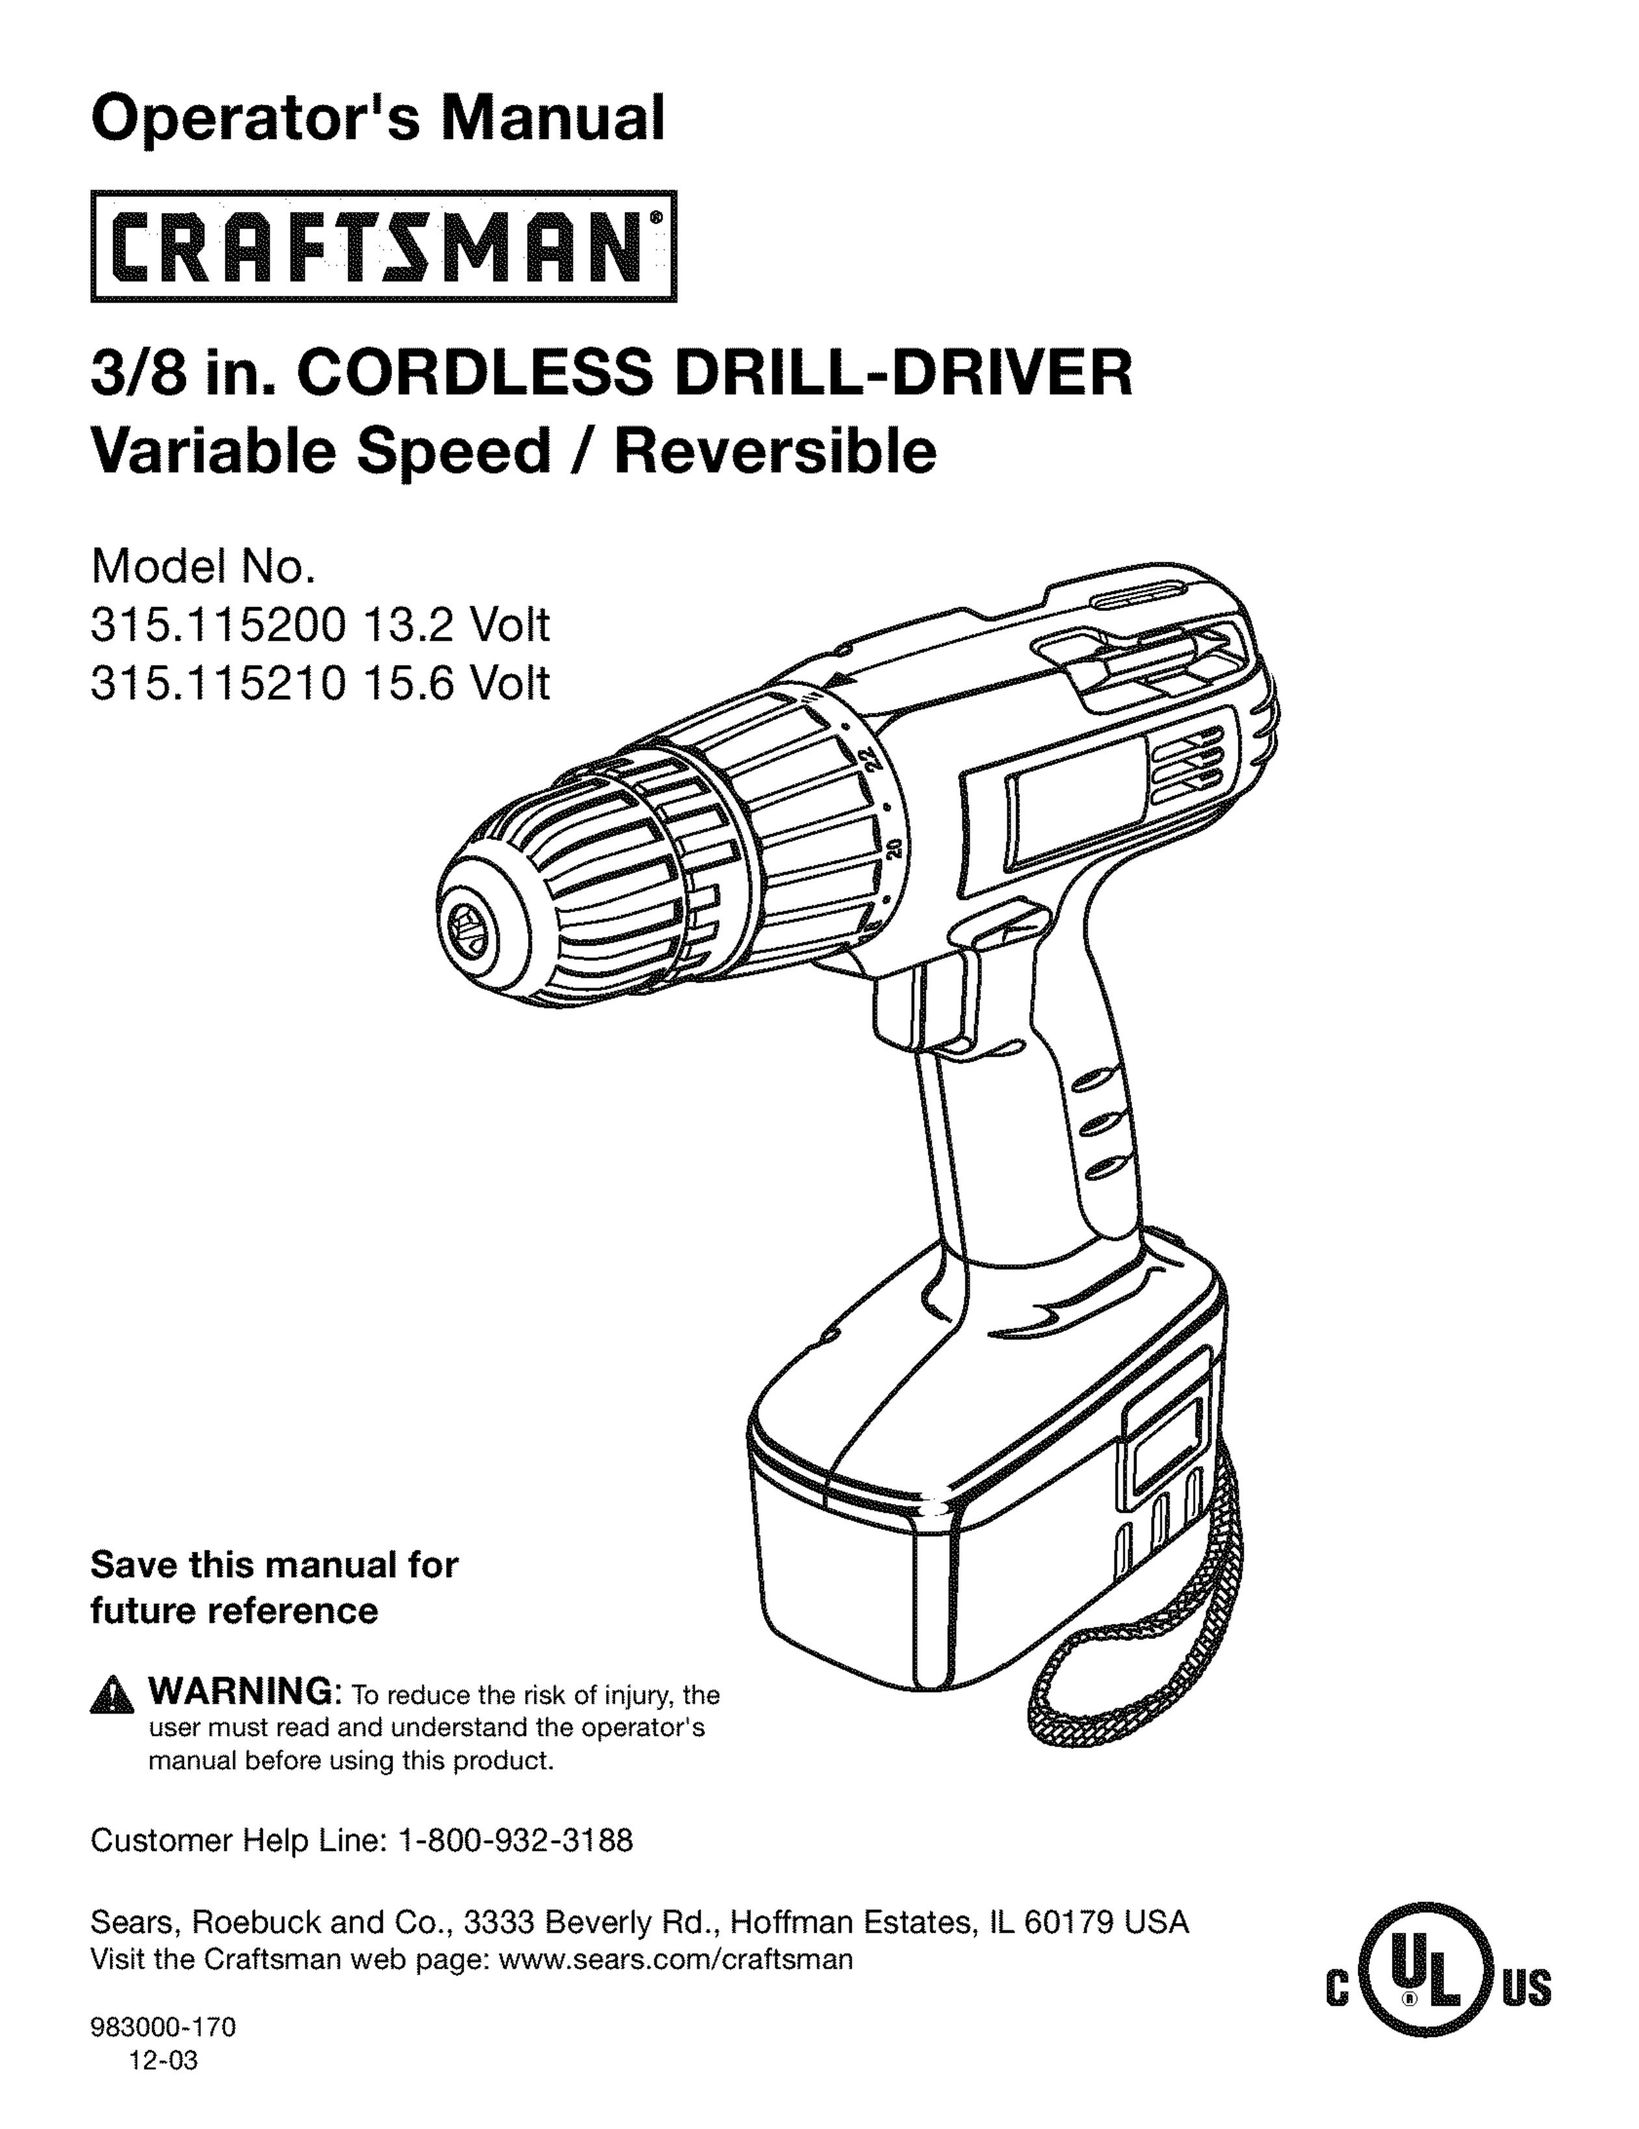 Craftsman 315.1152 Cordless Drill User Manual